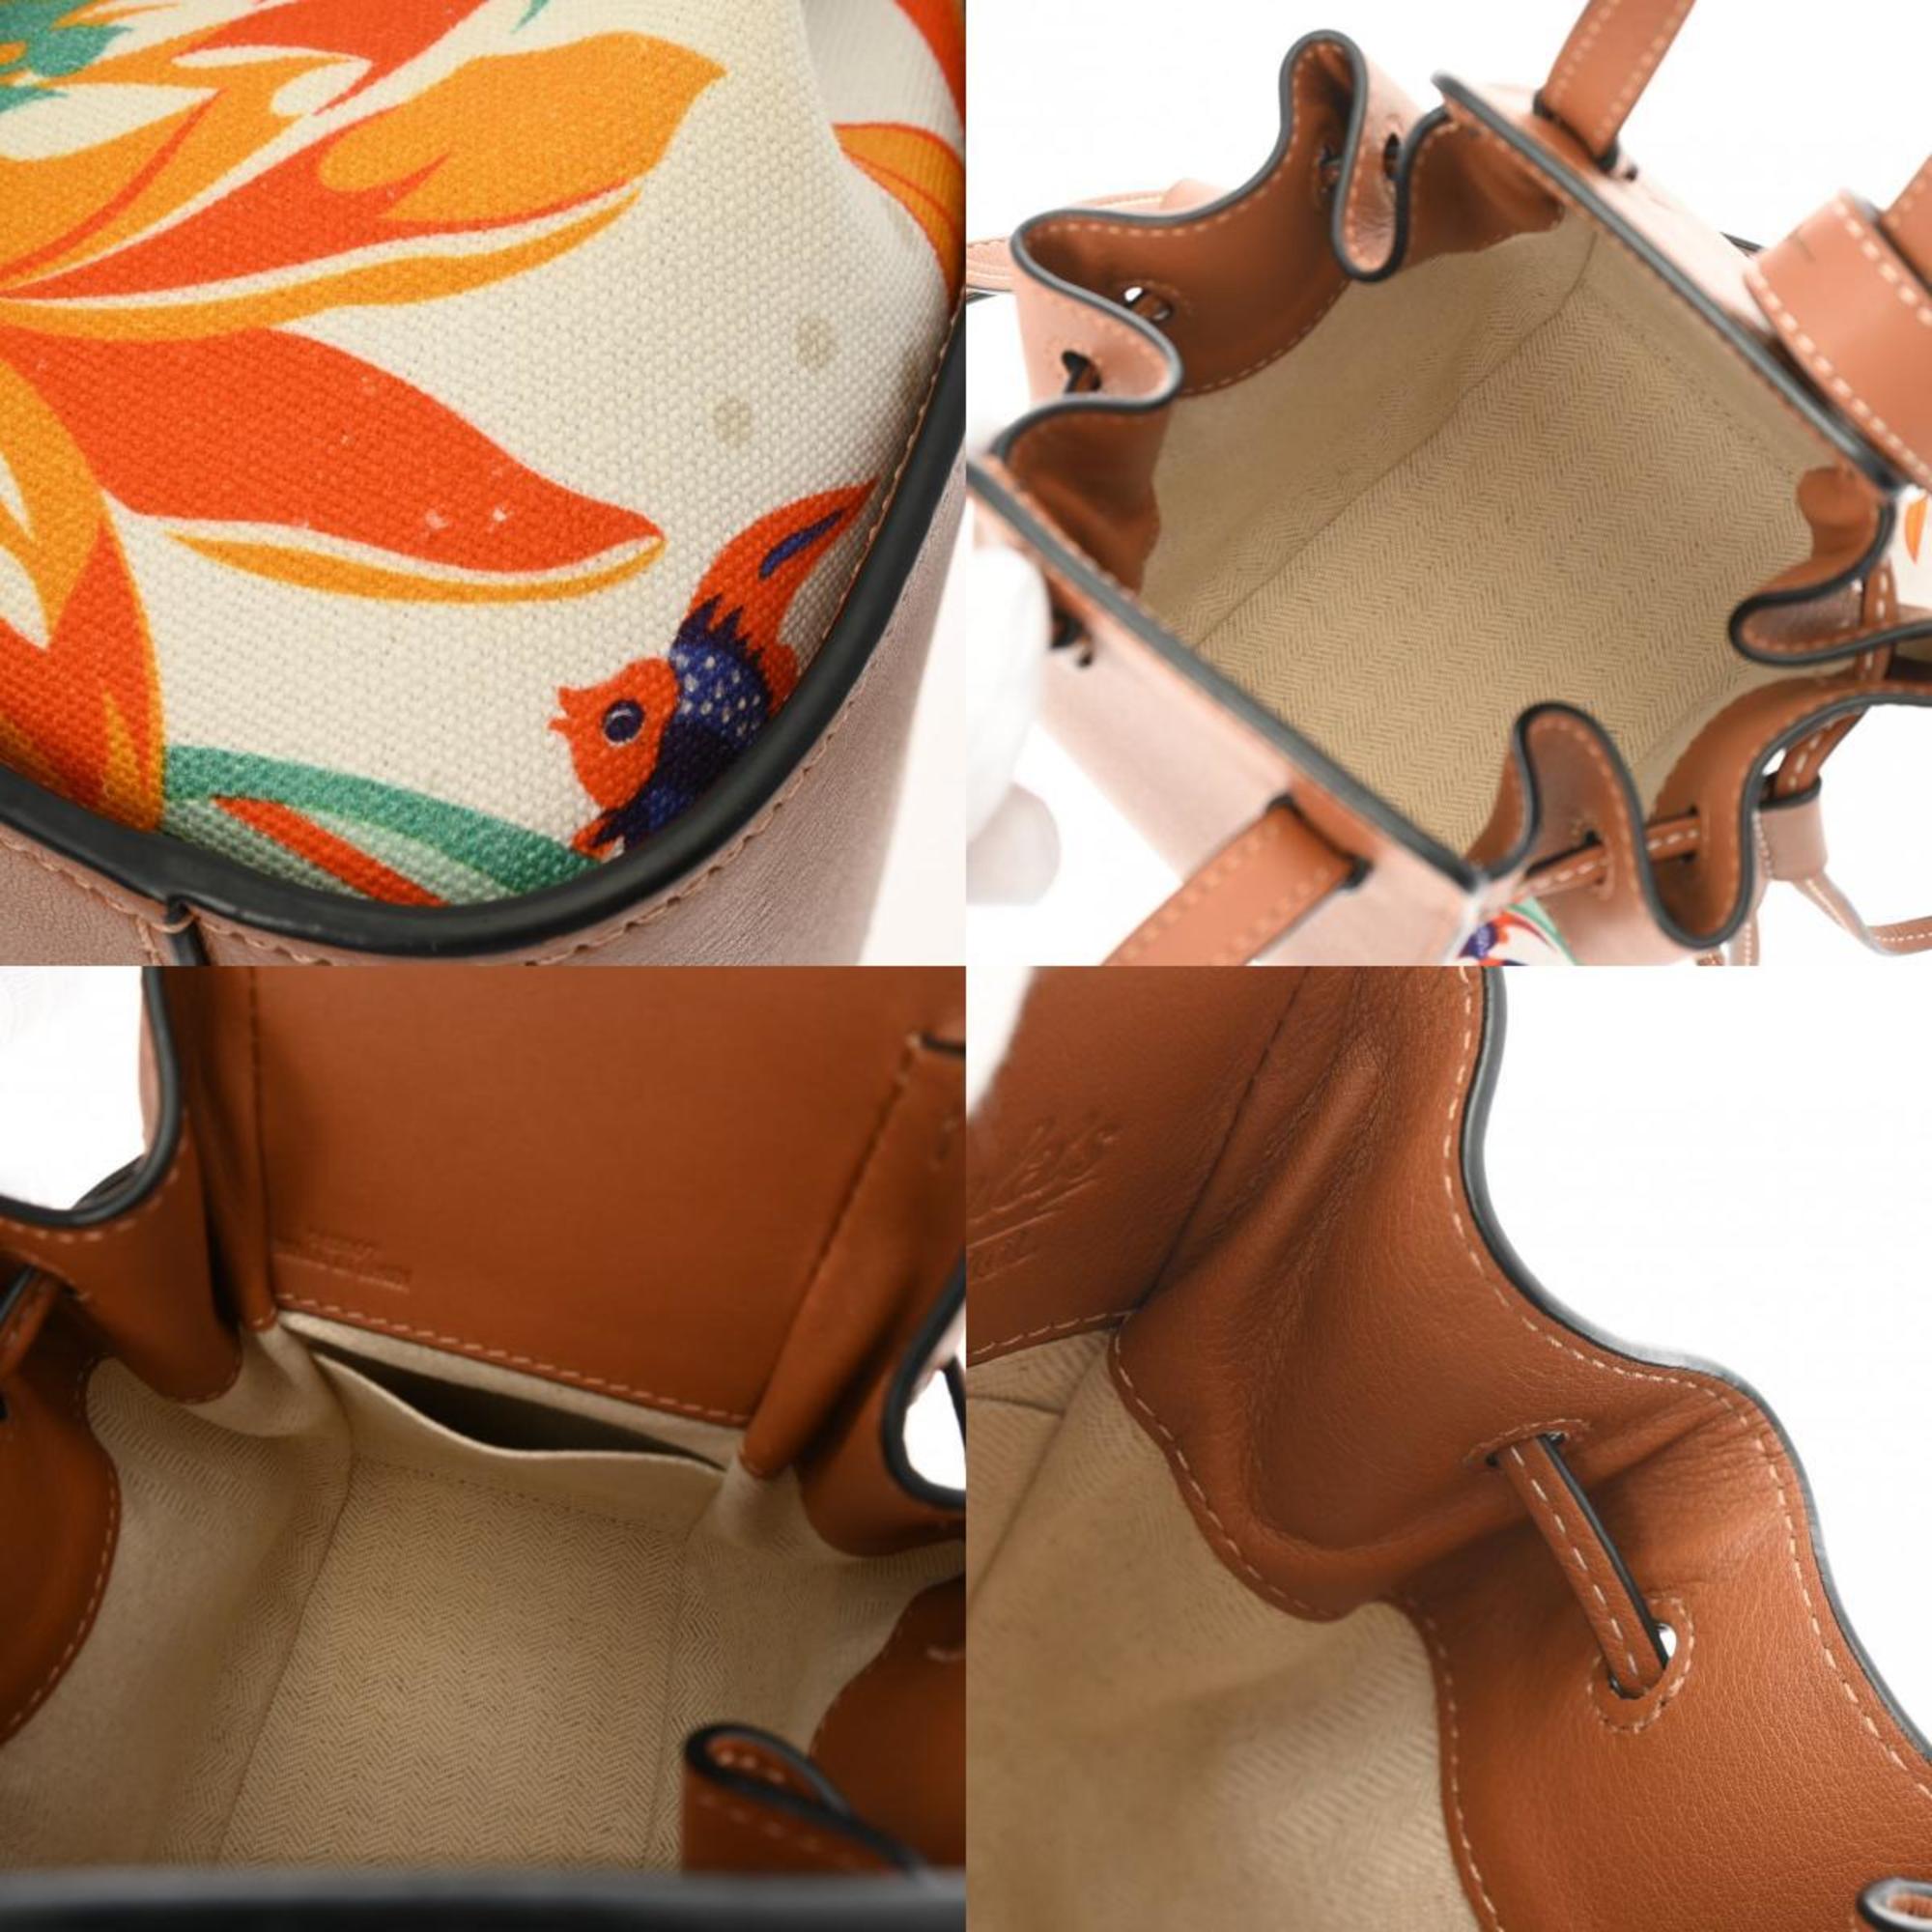 LOEWE Hammock Paula Zui Visa Tan/White/Orange Women's Canvas Leather Shoulder Bag